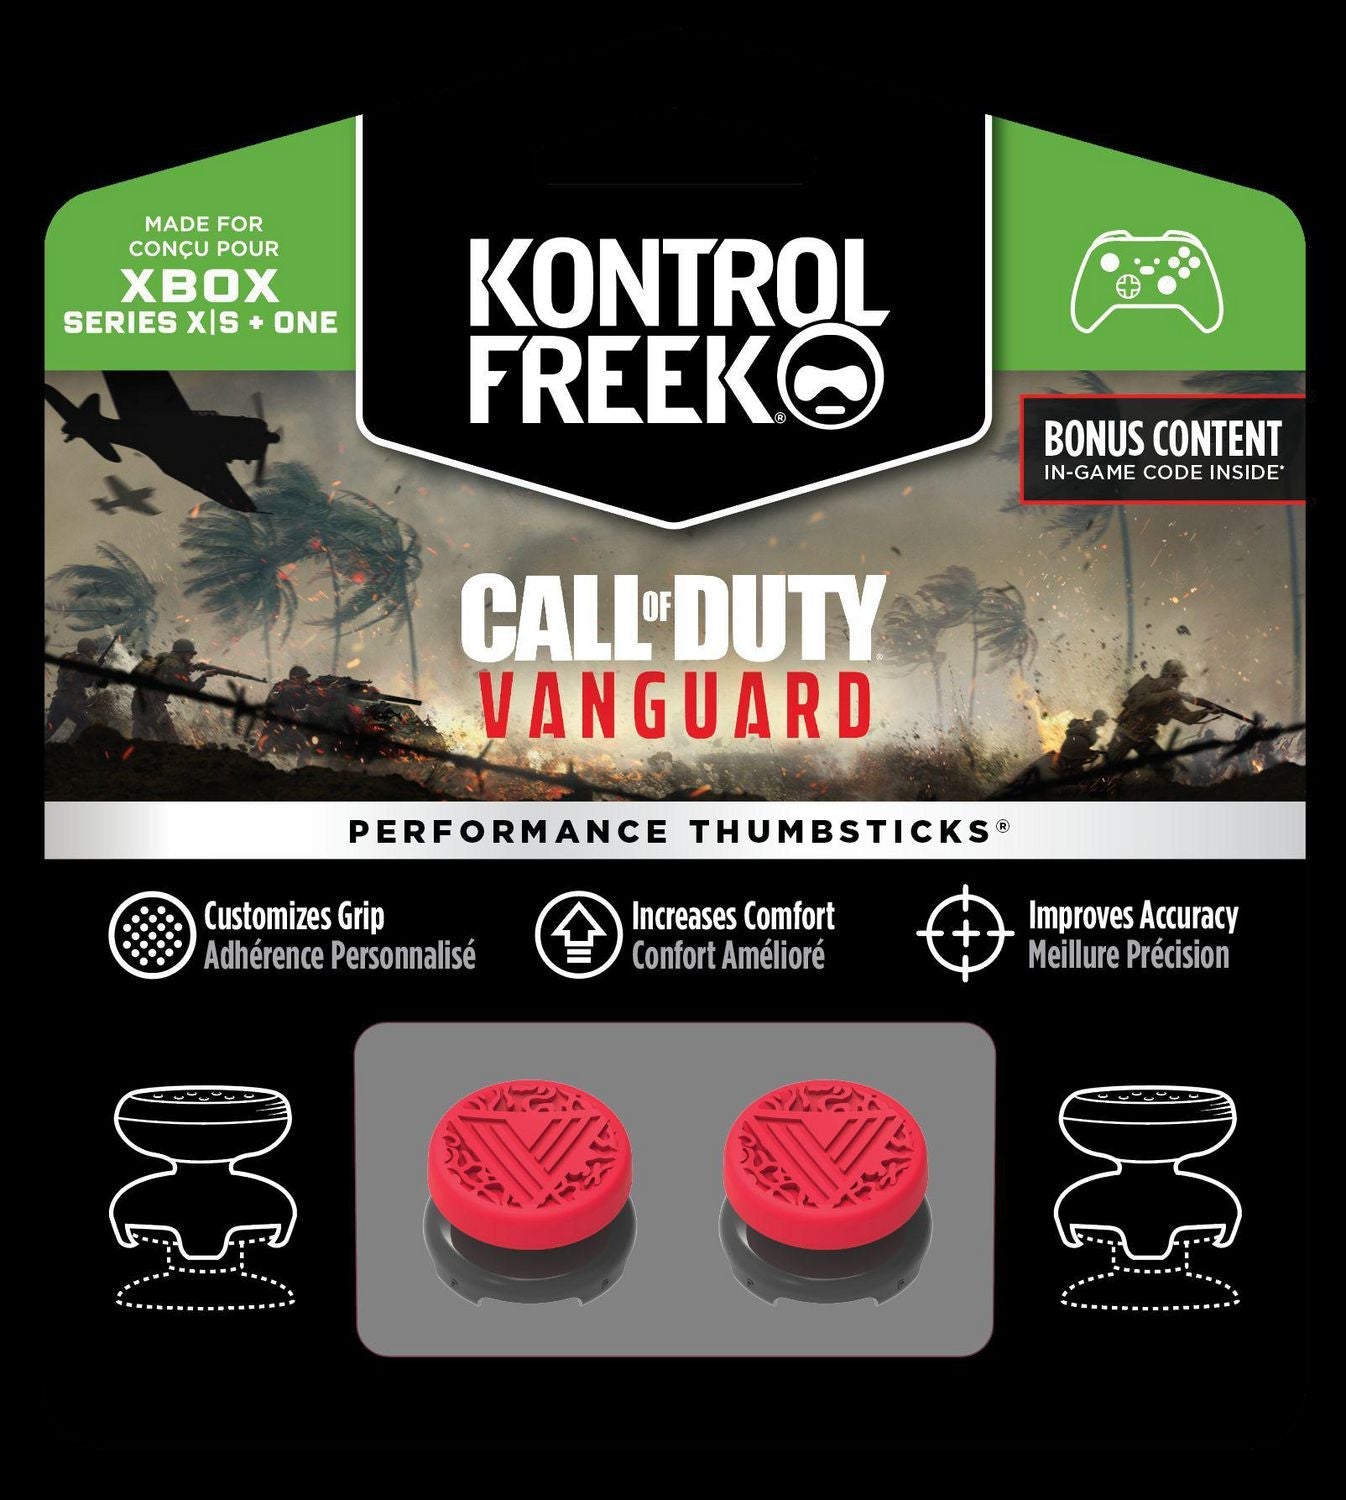 KontrolFreek COD: Vanguard Performance Thumbsticks for Xbox One & Xbox Series X|S - Open Box